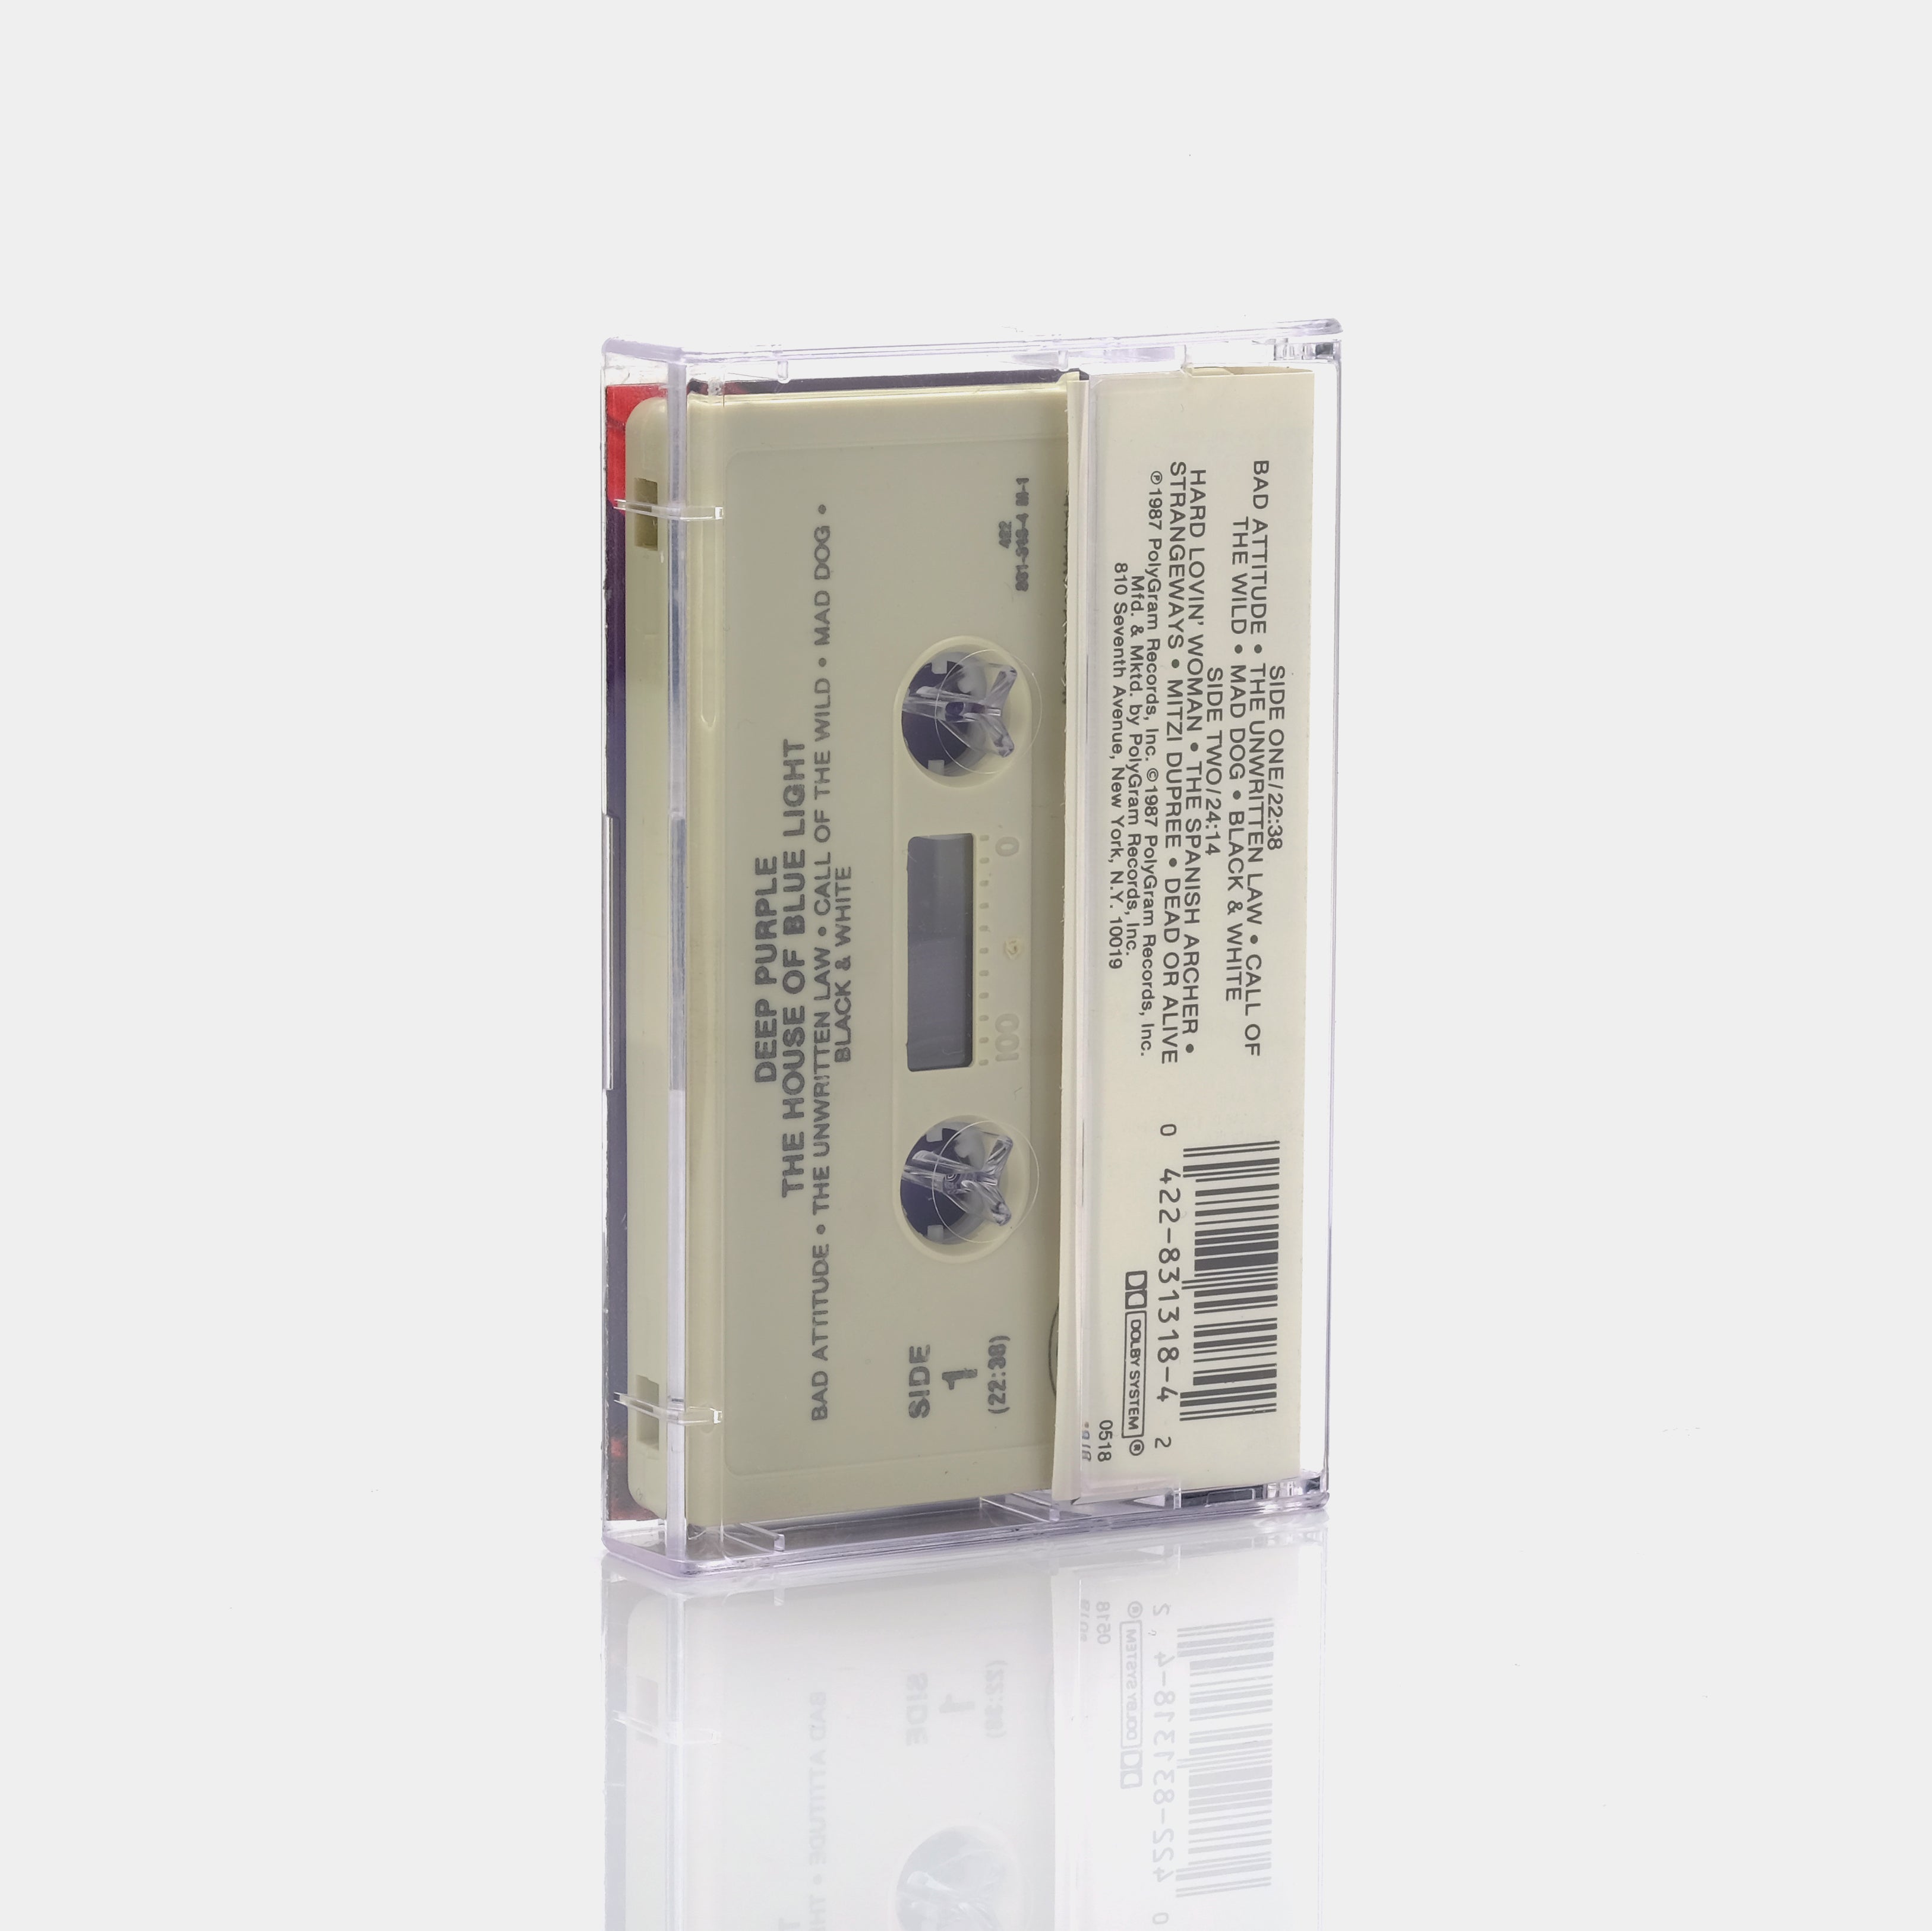 Deep Purple - The House of Blue Light Cassette Tape